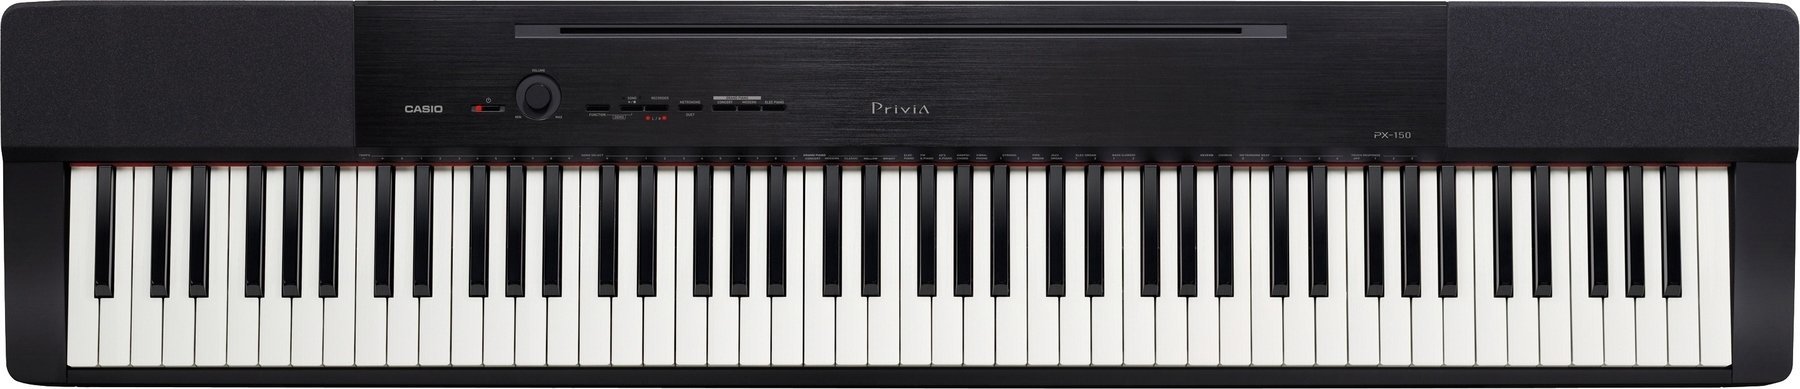 Digitalt scen piano Casio PX150 BK Privia